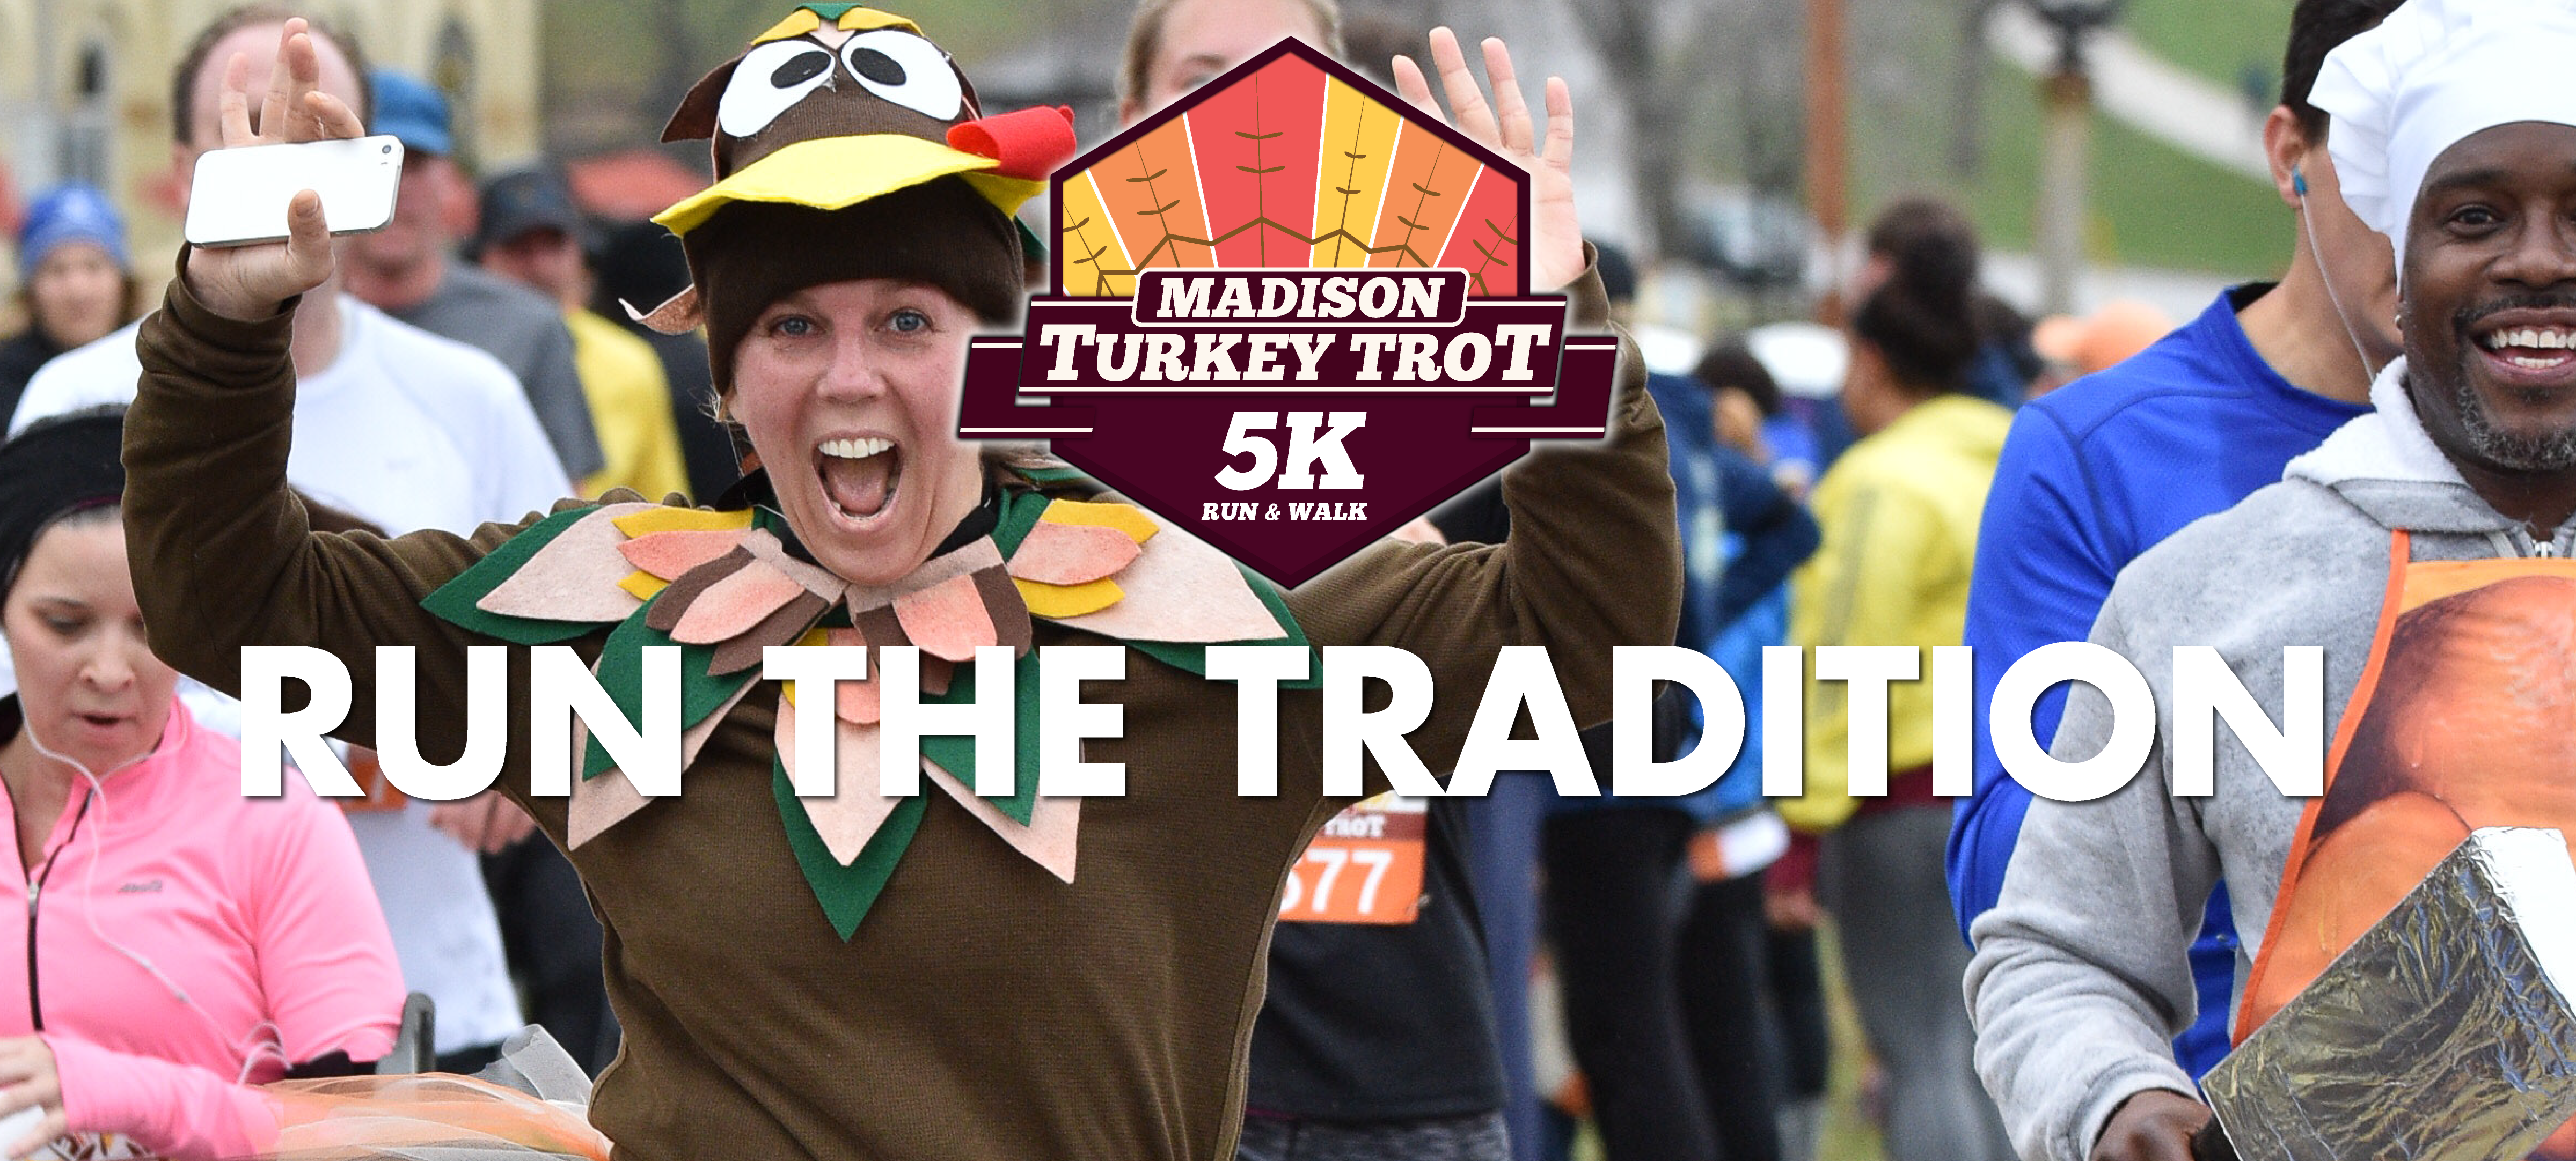 Madison Turkey Trot